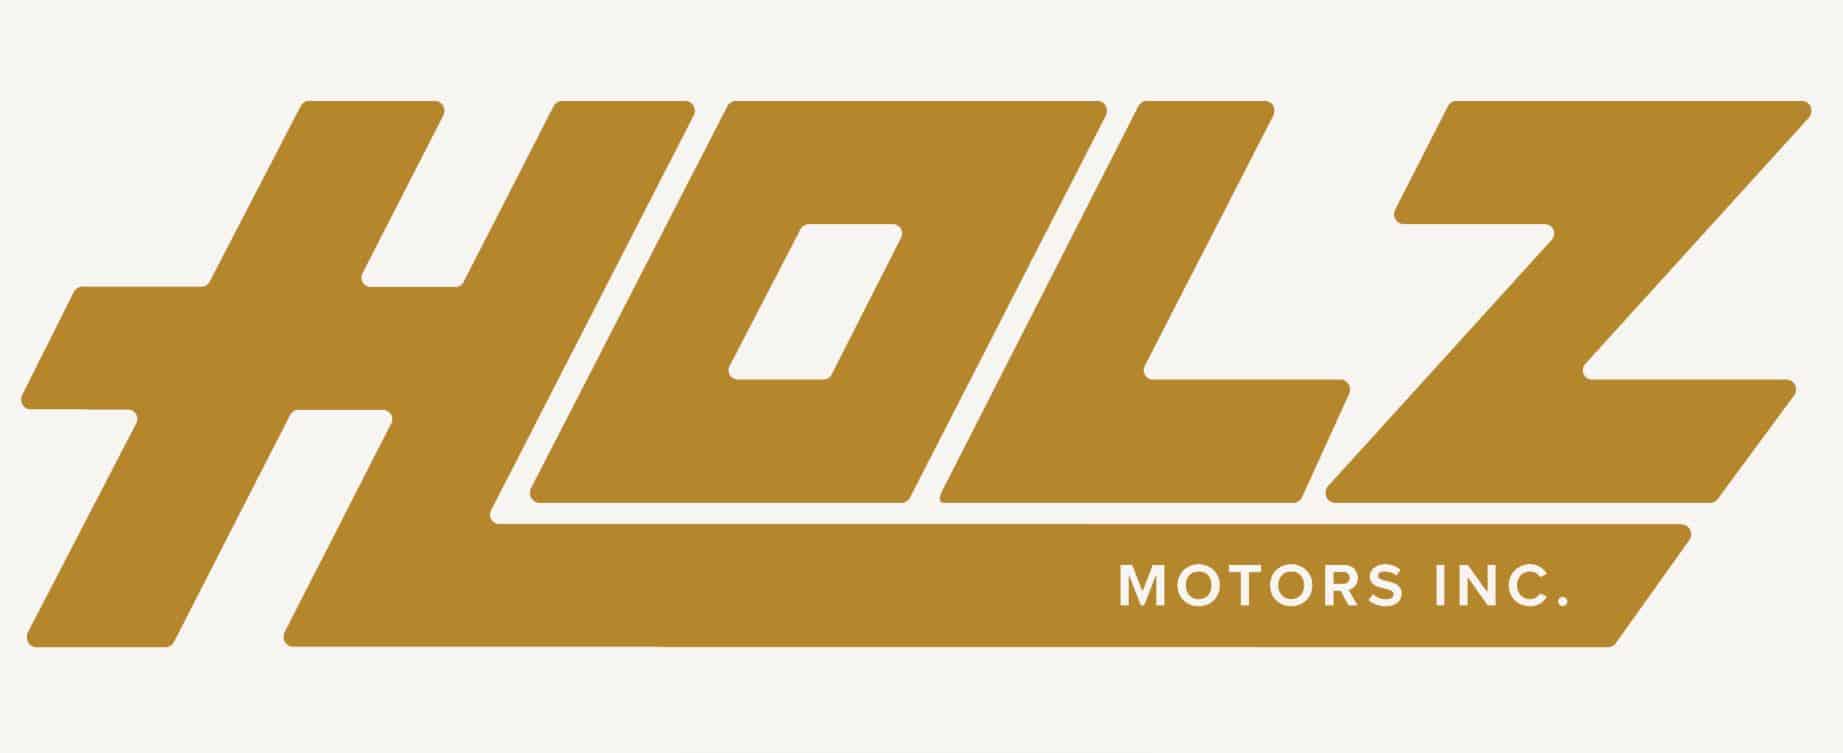 Holz Motors Inc.